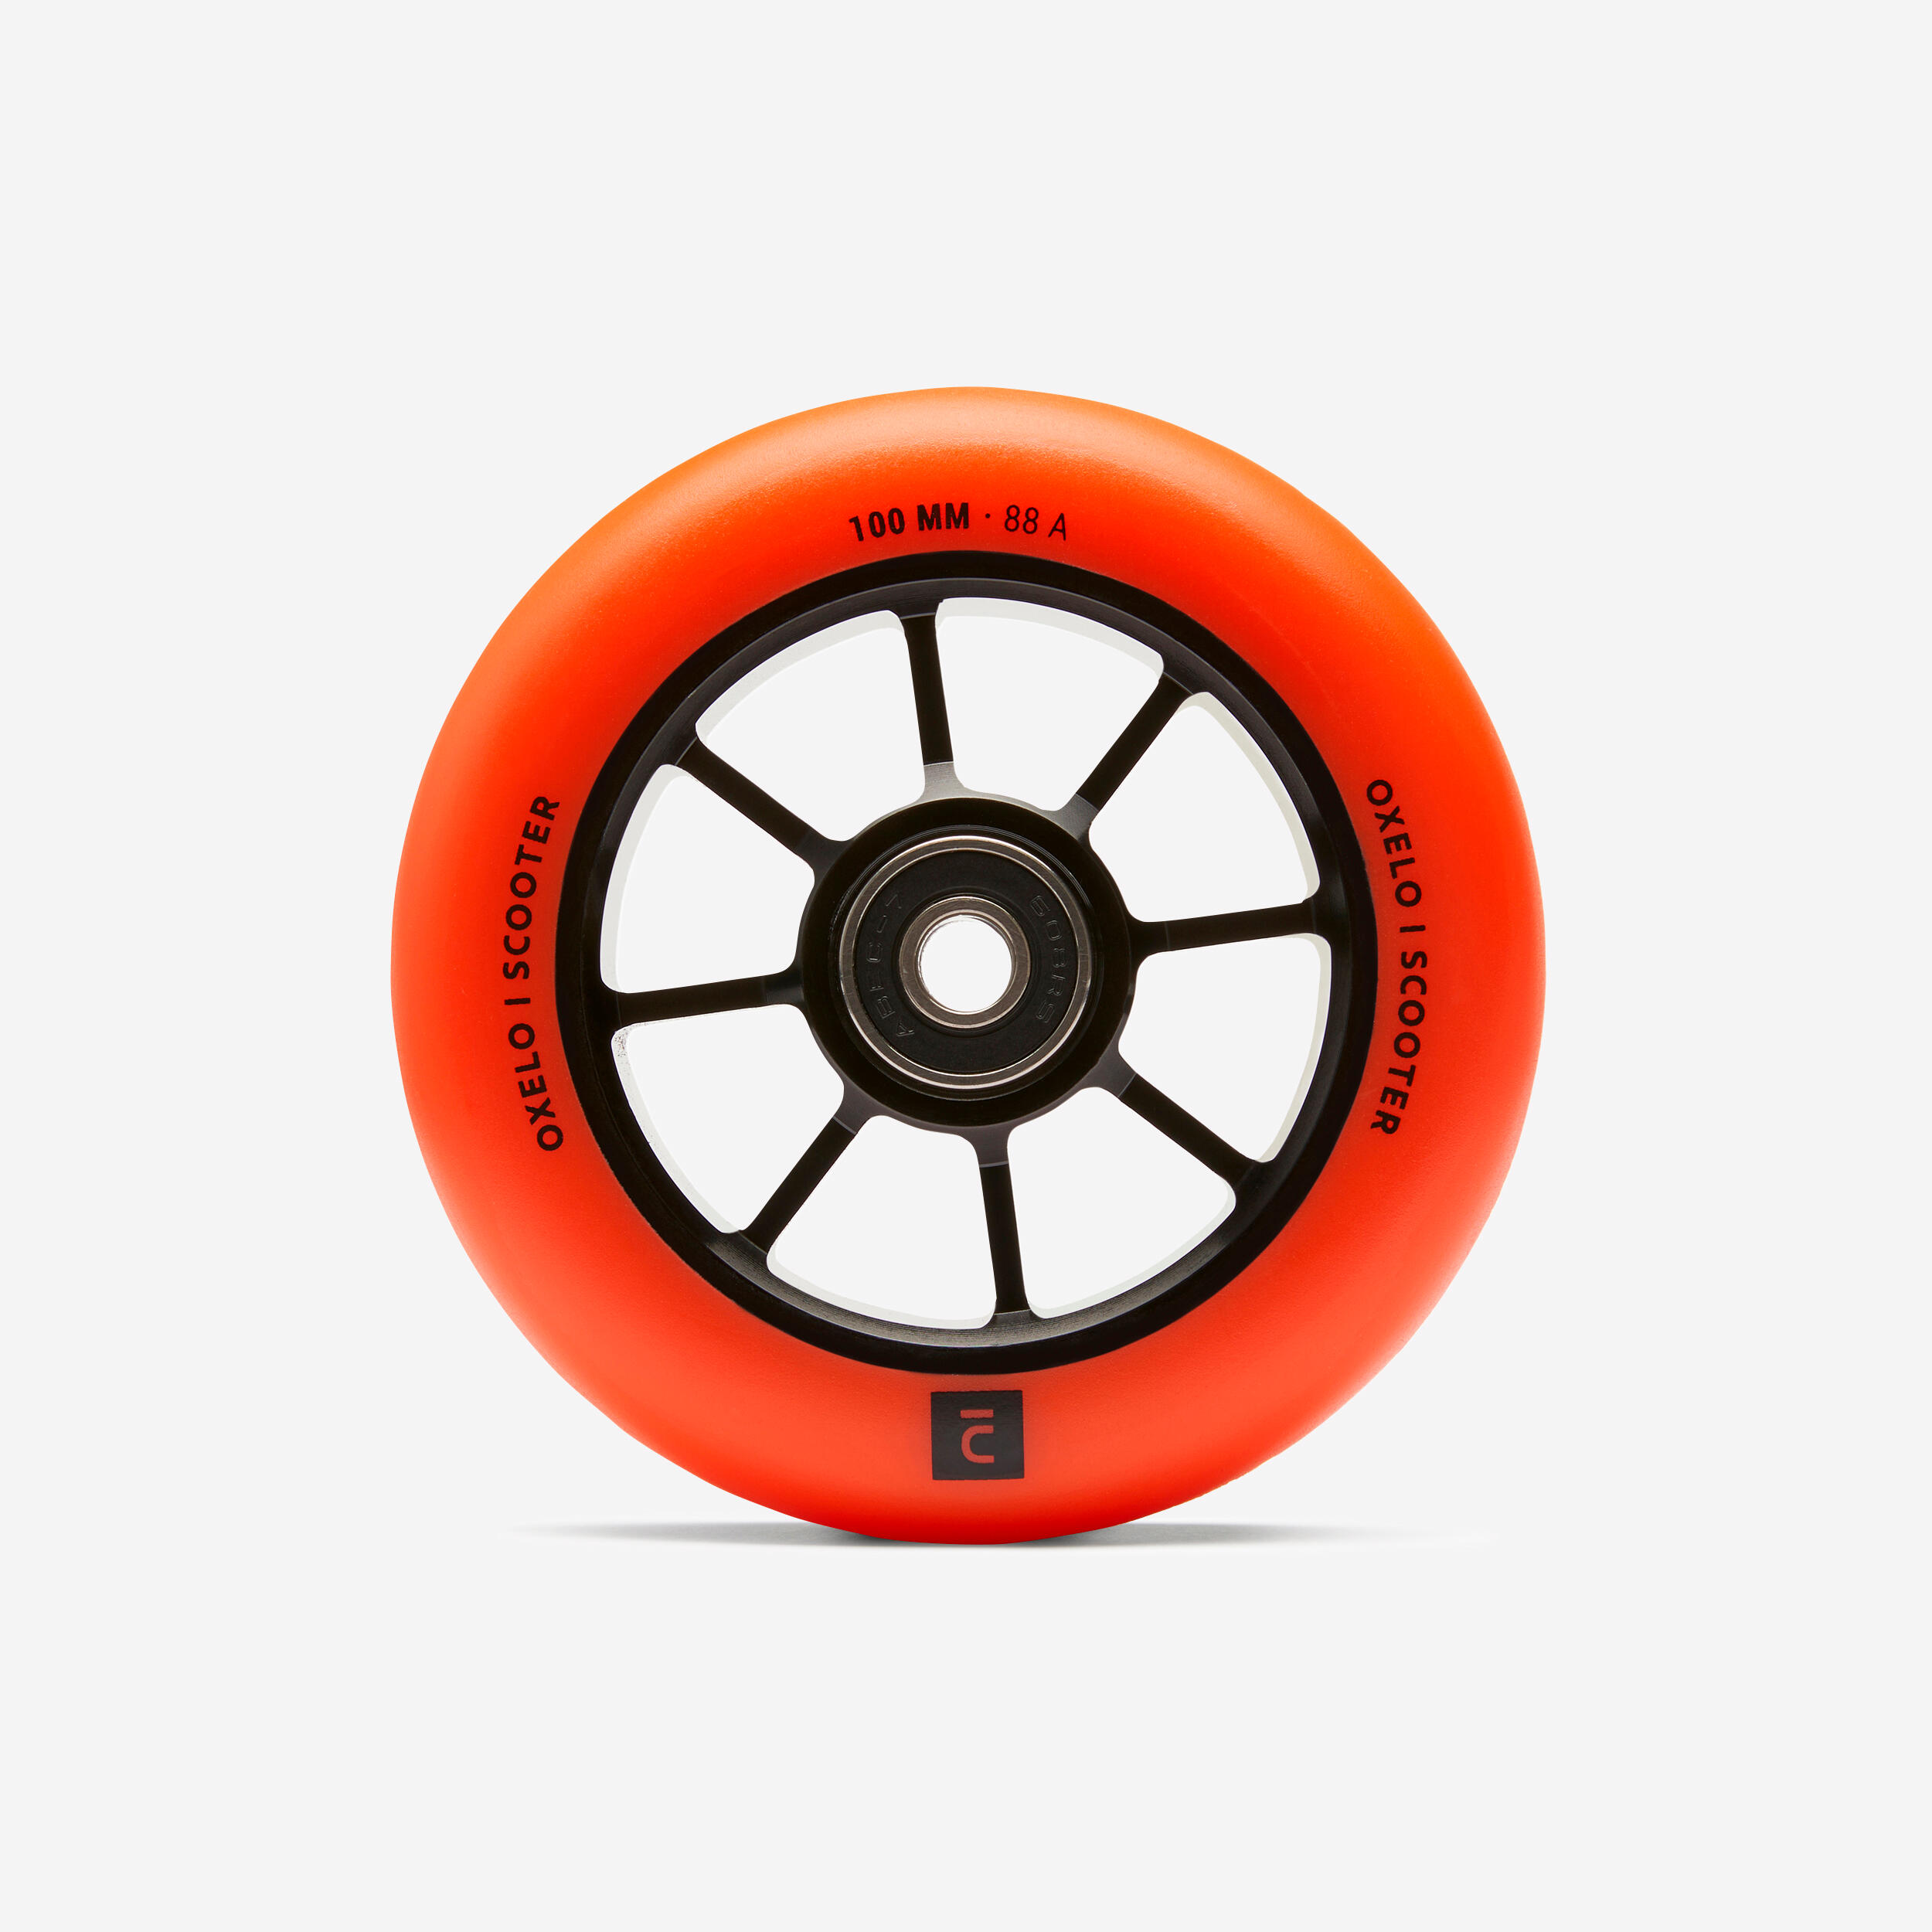 100 mm Freestyle Wheel with Black Alu Rim & Fluo Orange PU85A Rubber 1/3